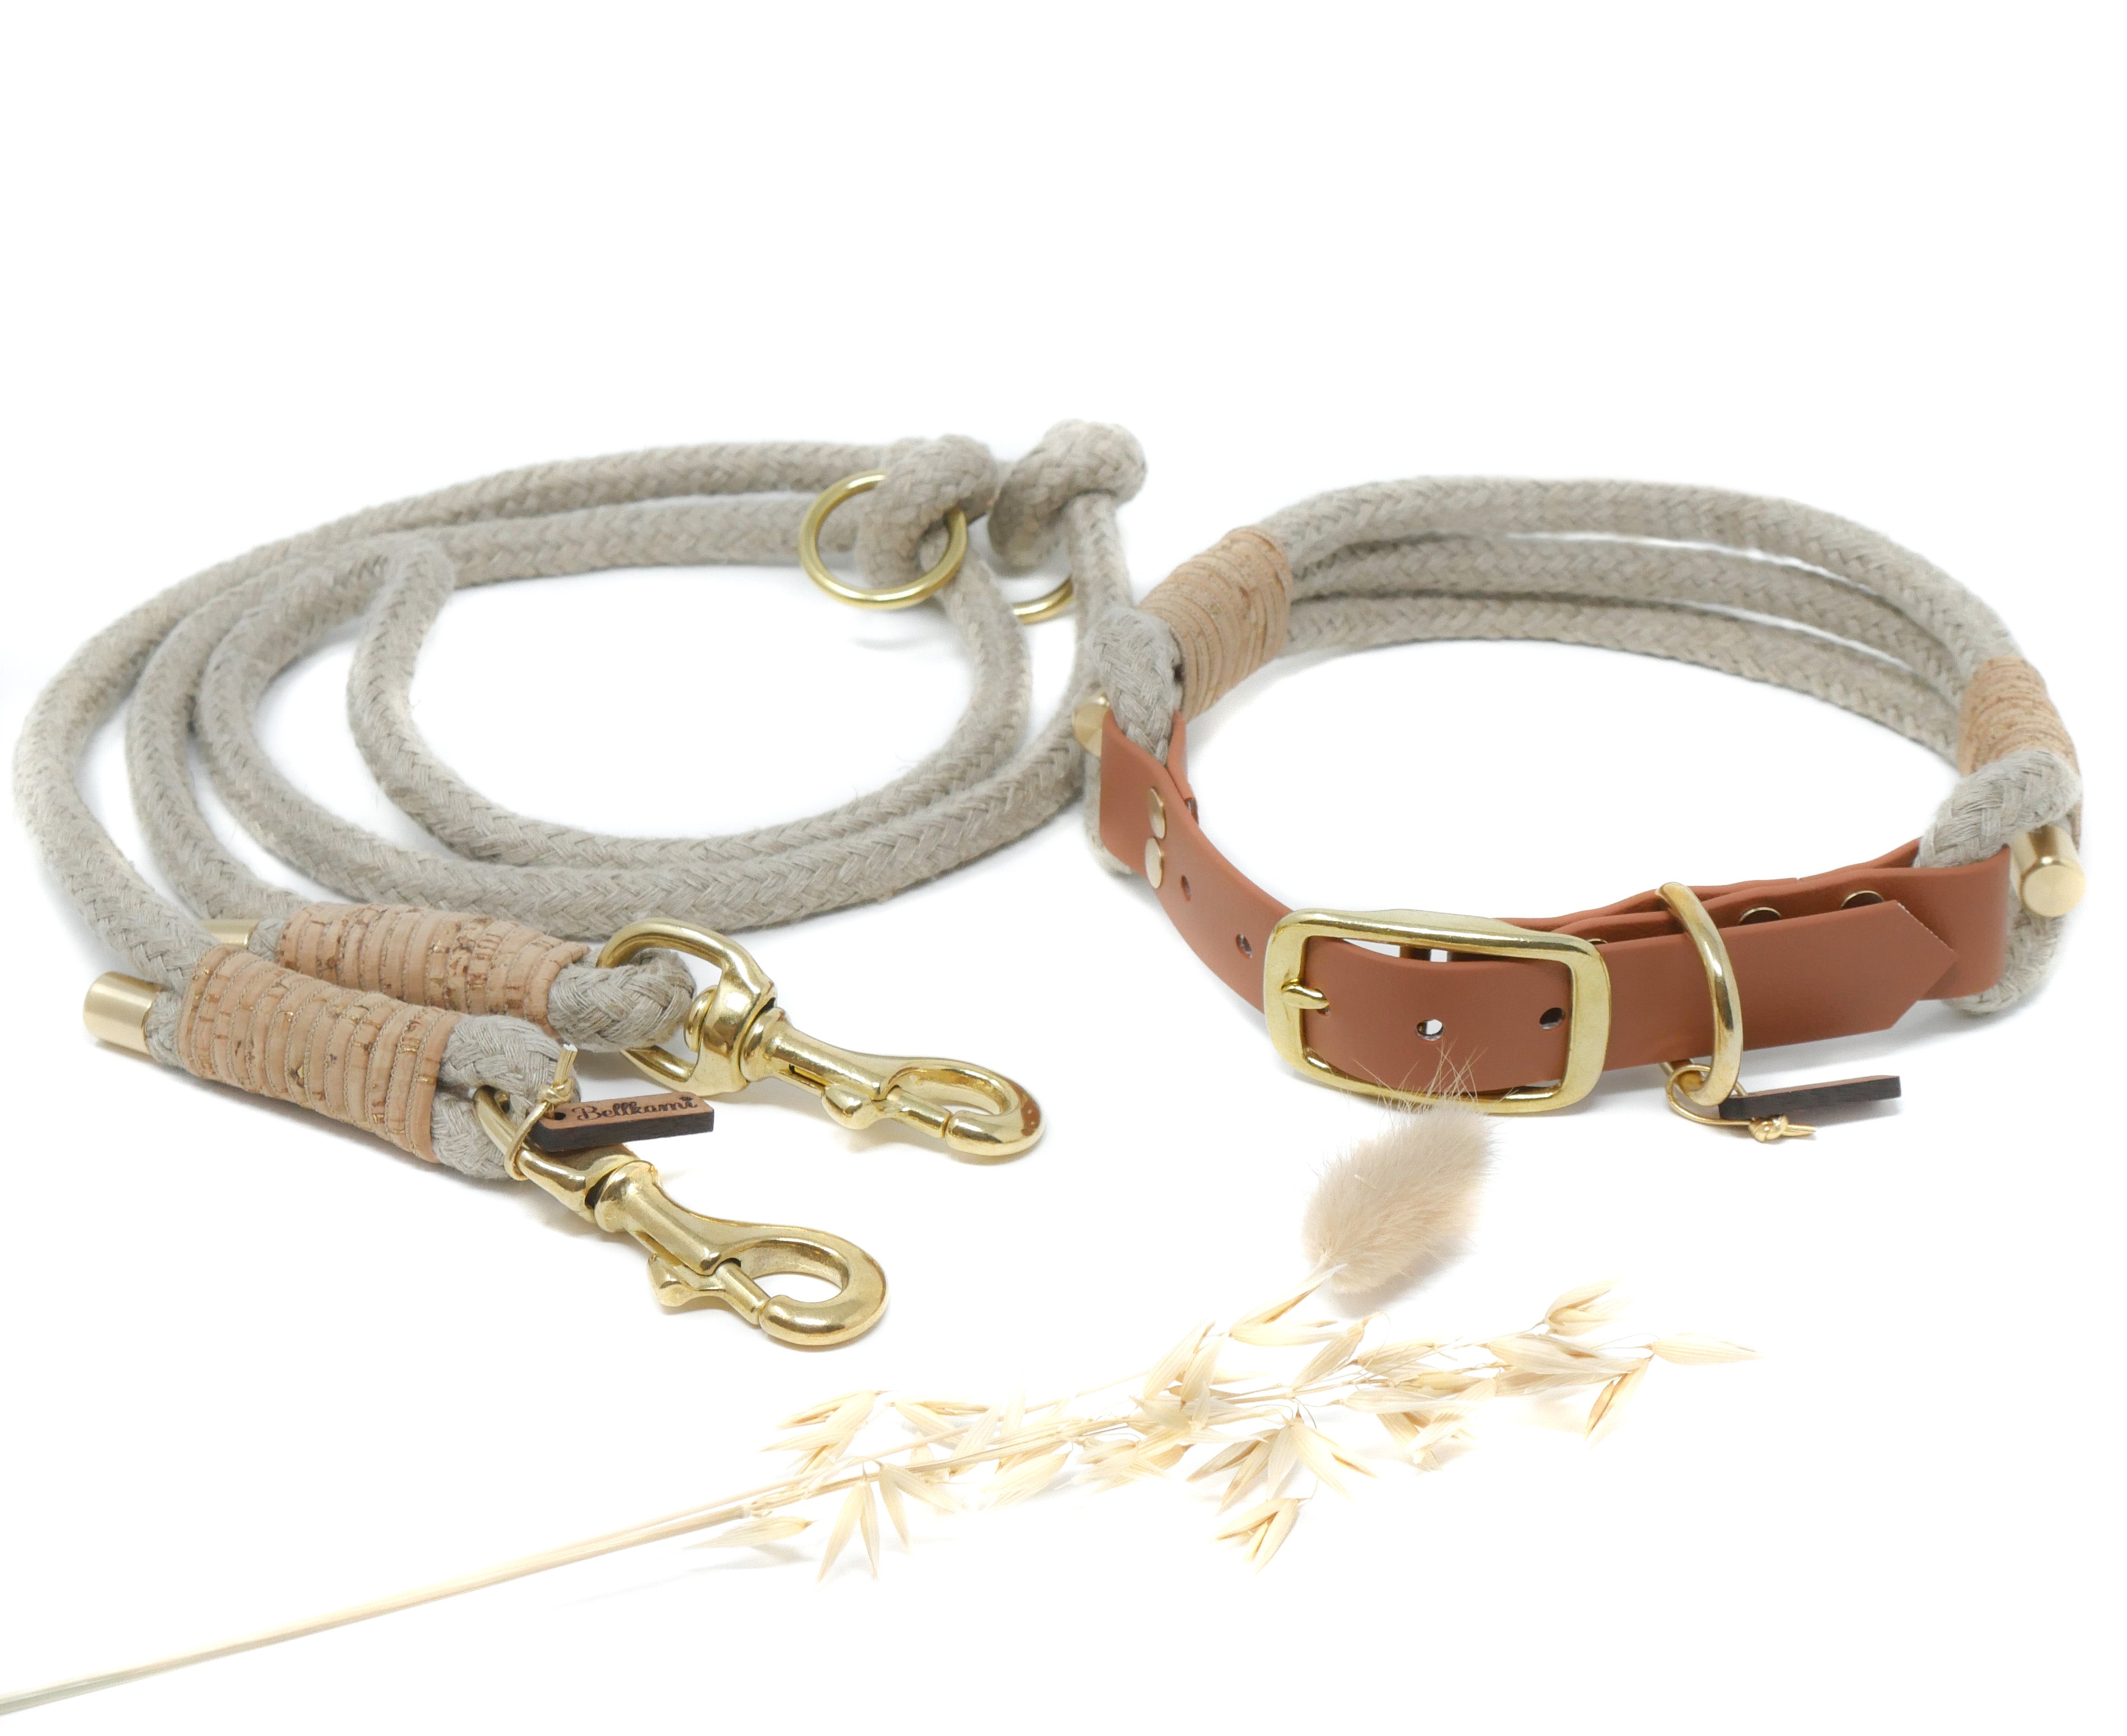 Rope collar 'Sahara' - made of hemp rope